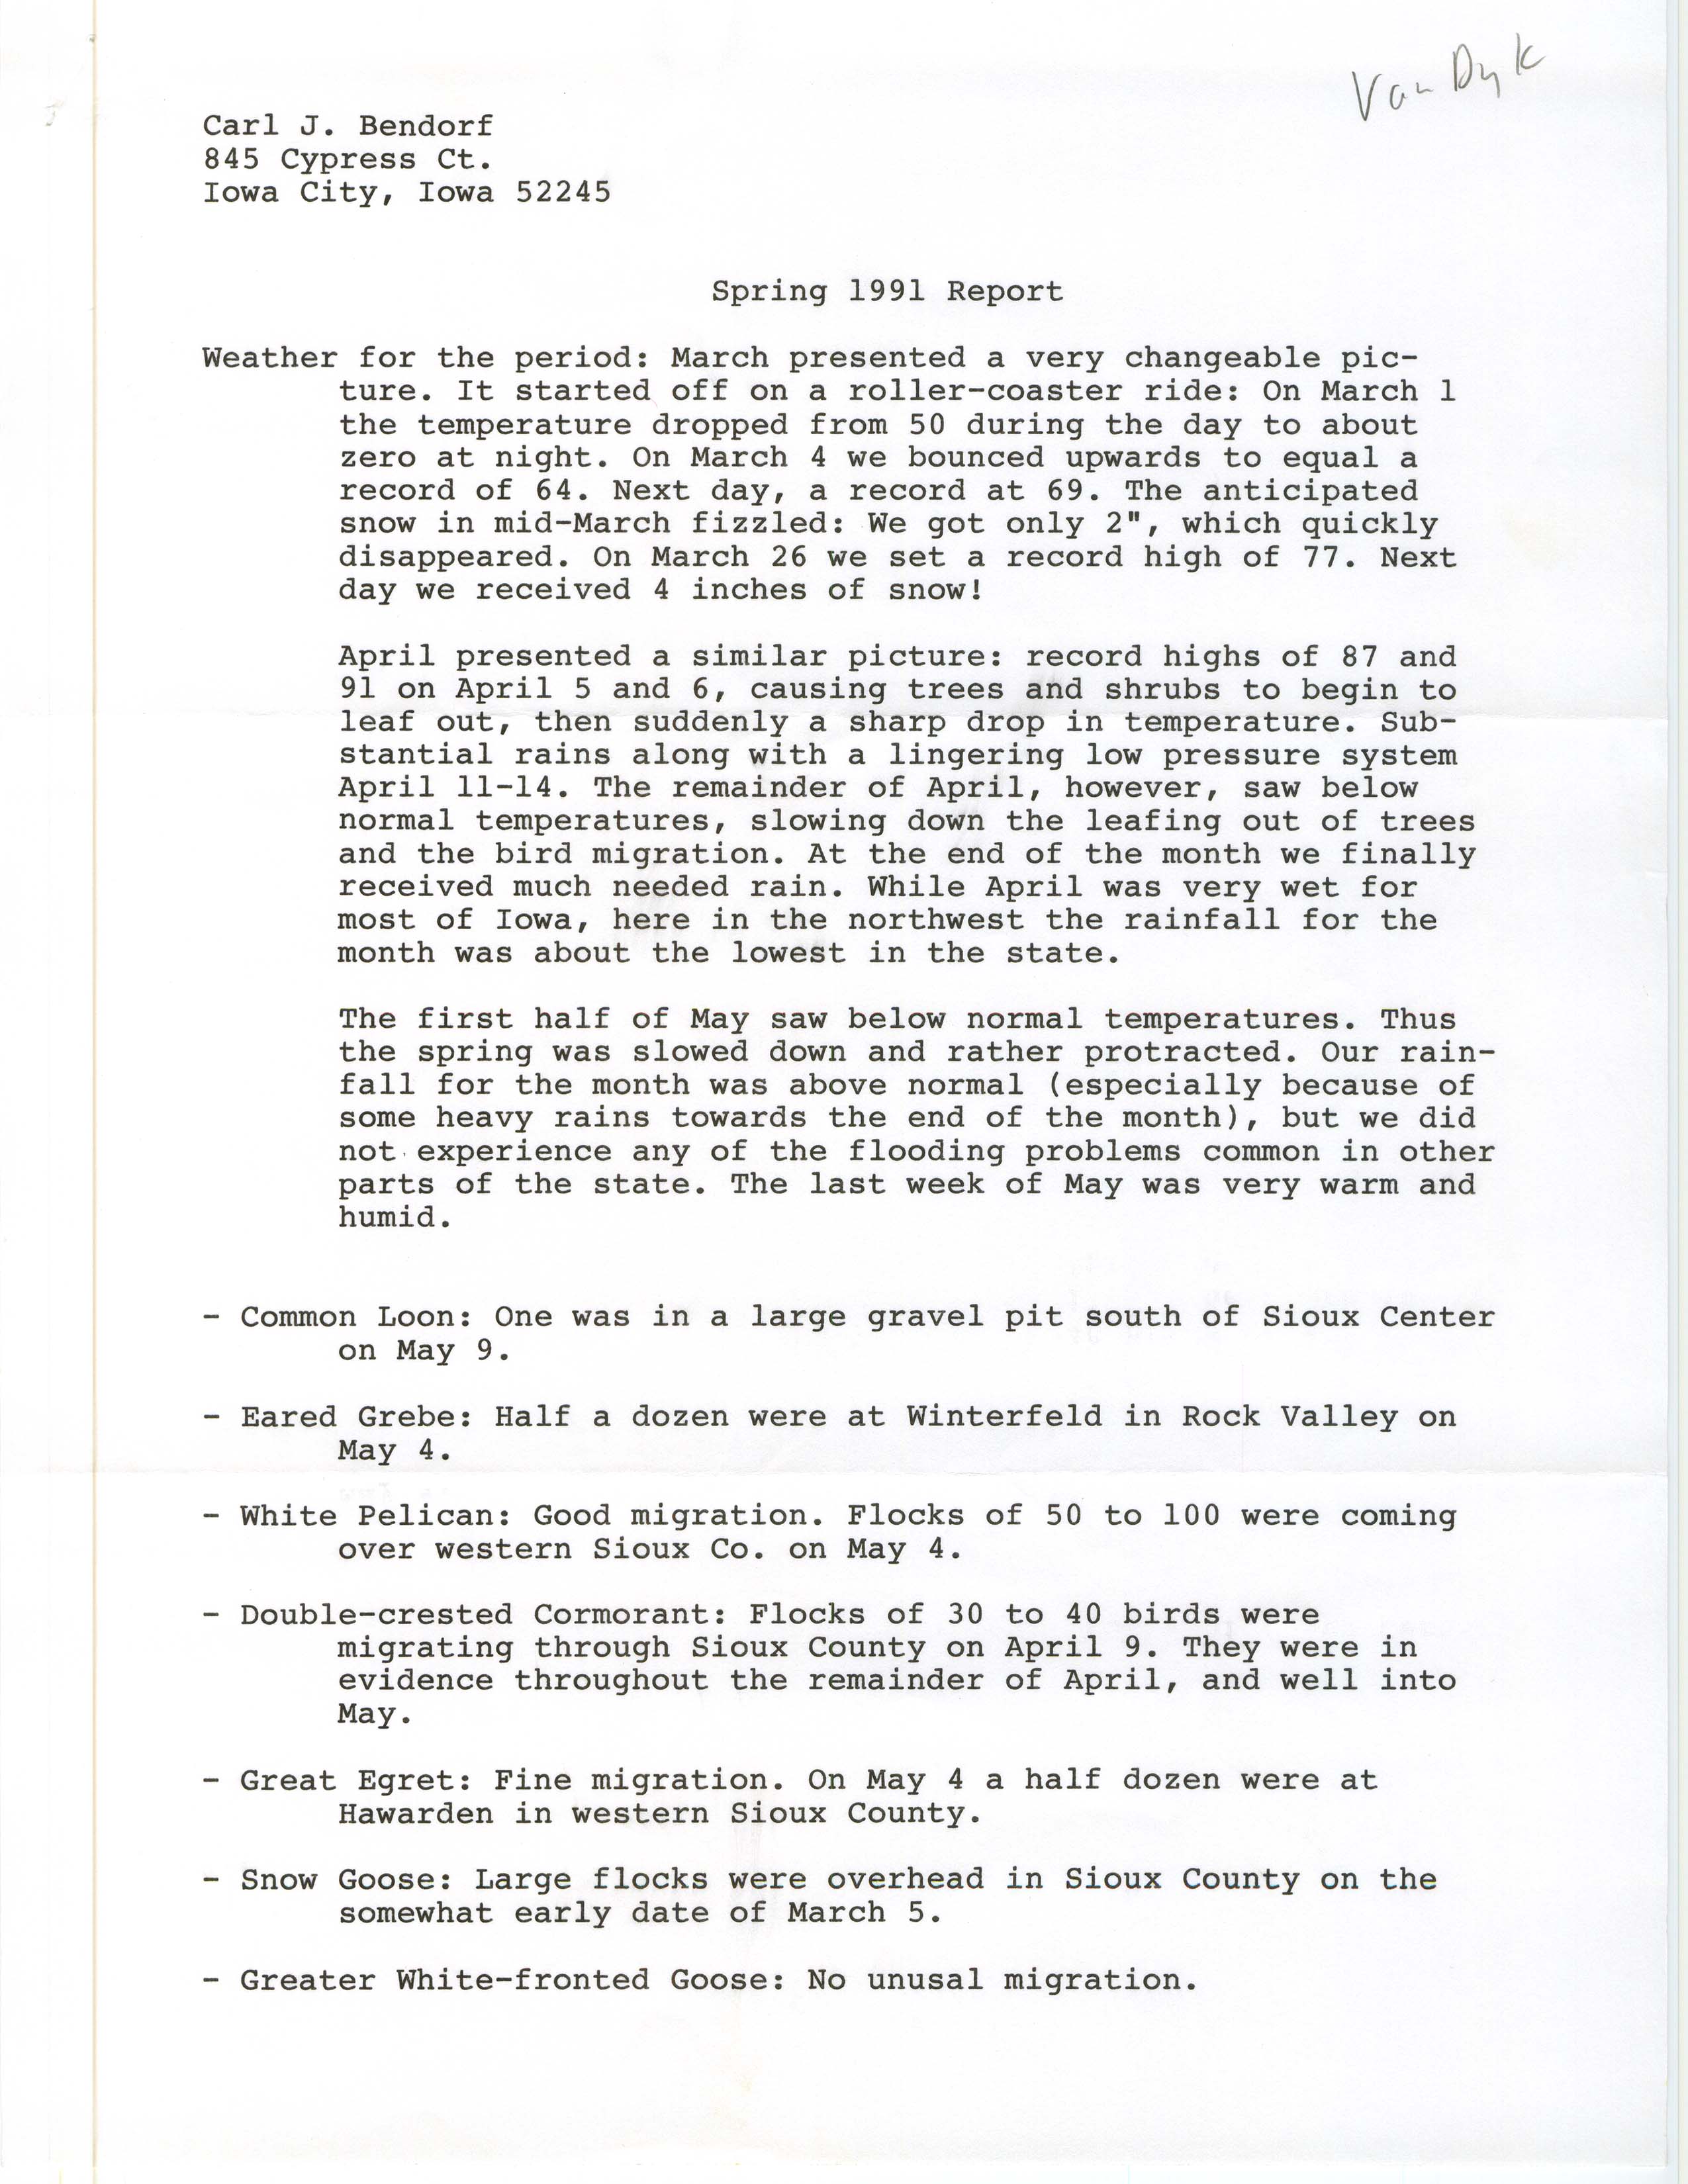 John Van Dyk letter to Carl Bendorf, June 1 1991